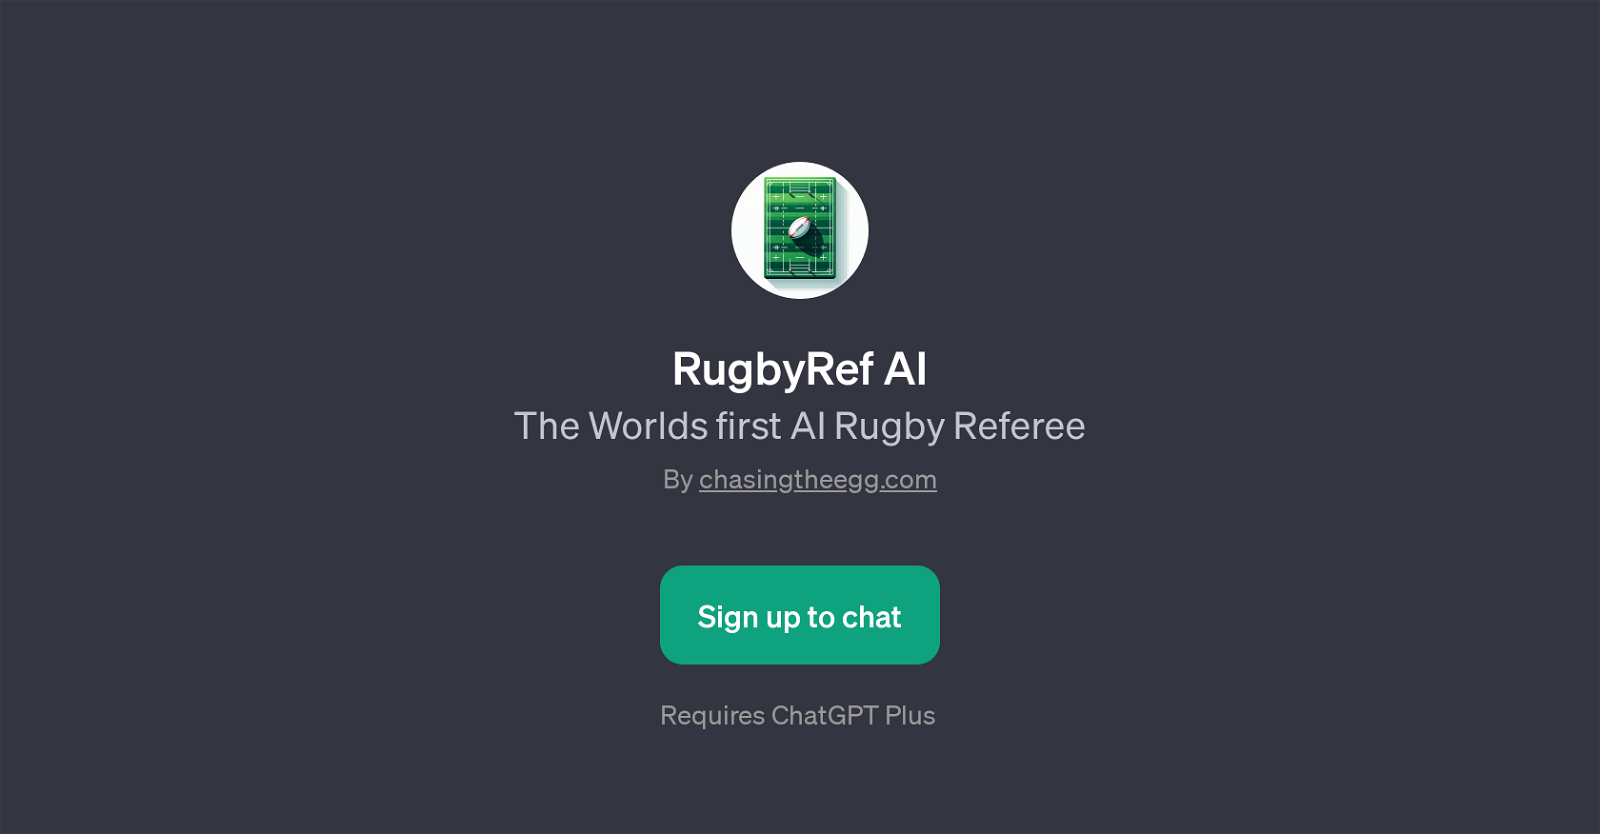 RugbyRef AI website